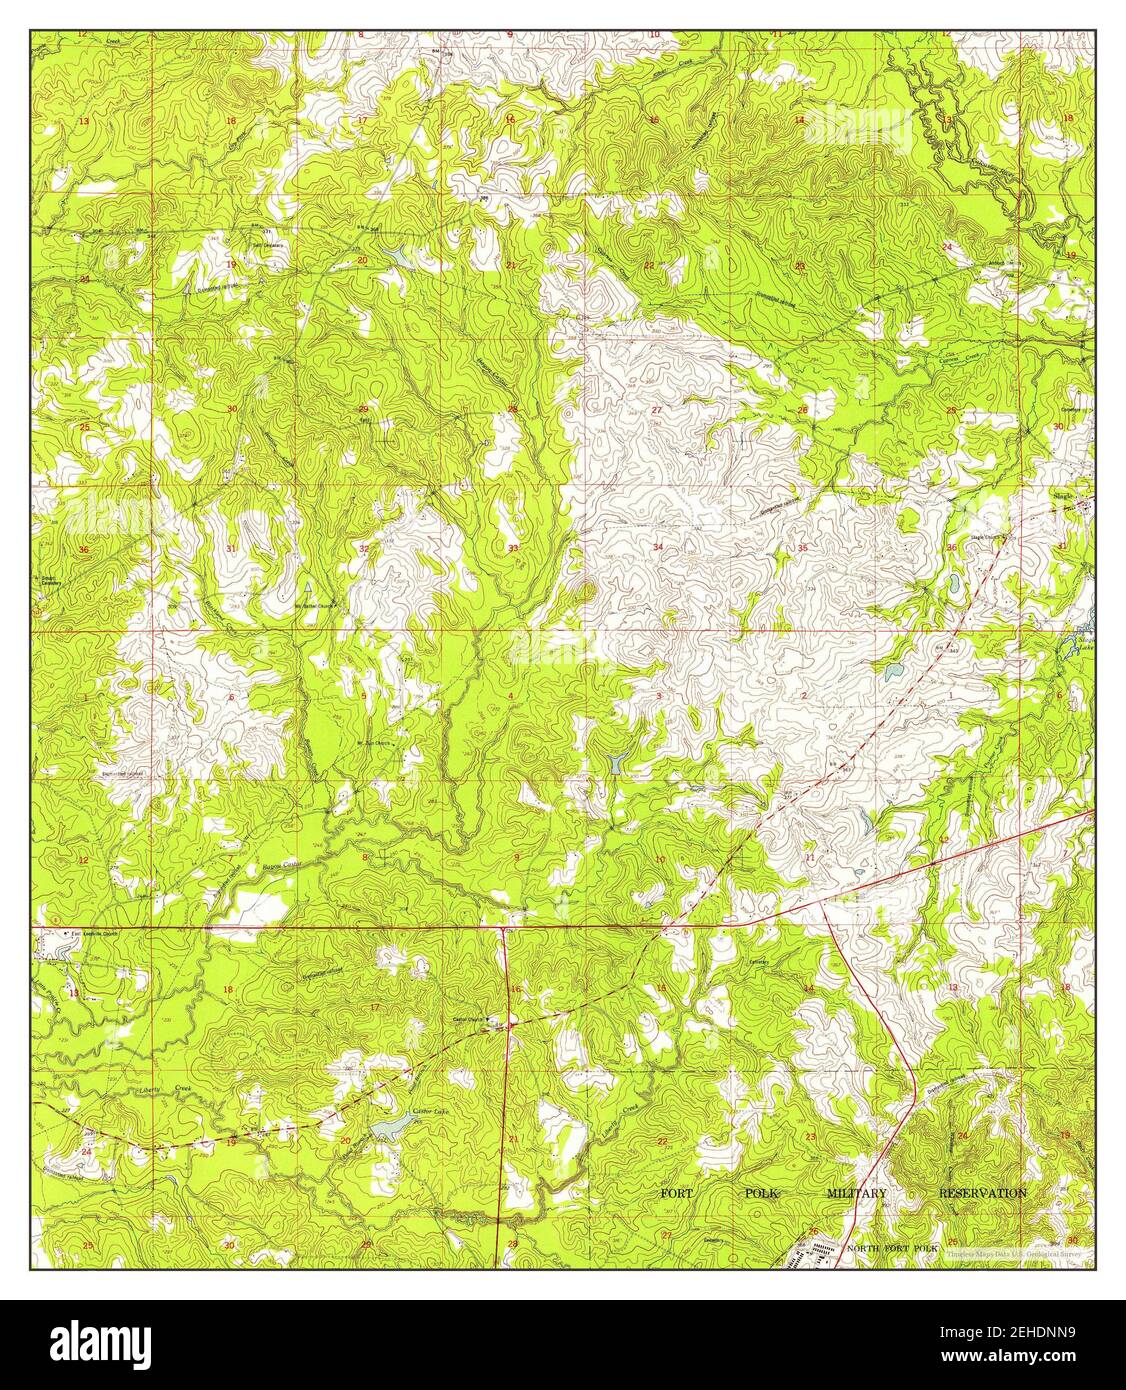 Slagle, Louisiana, map 1954, 1:24000, United States of America by Timeless Maps, data U.S. Geological Survey Stock Photo